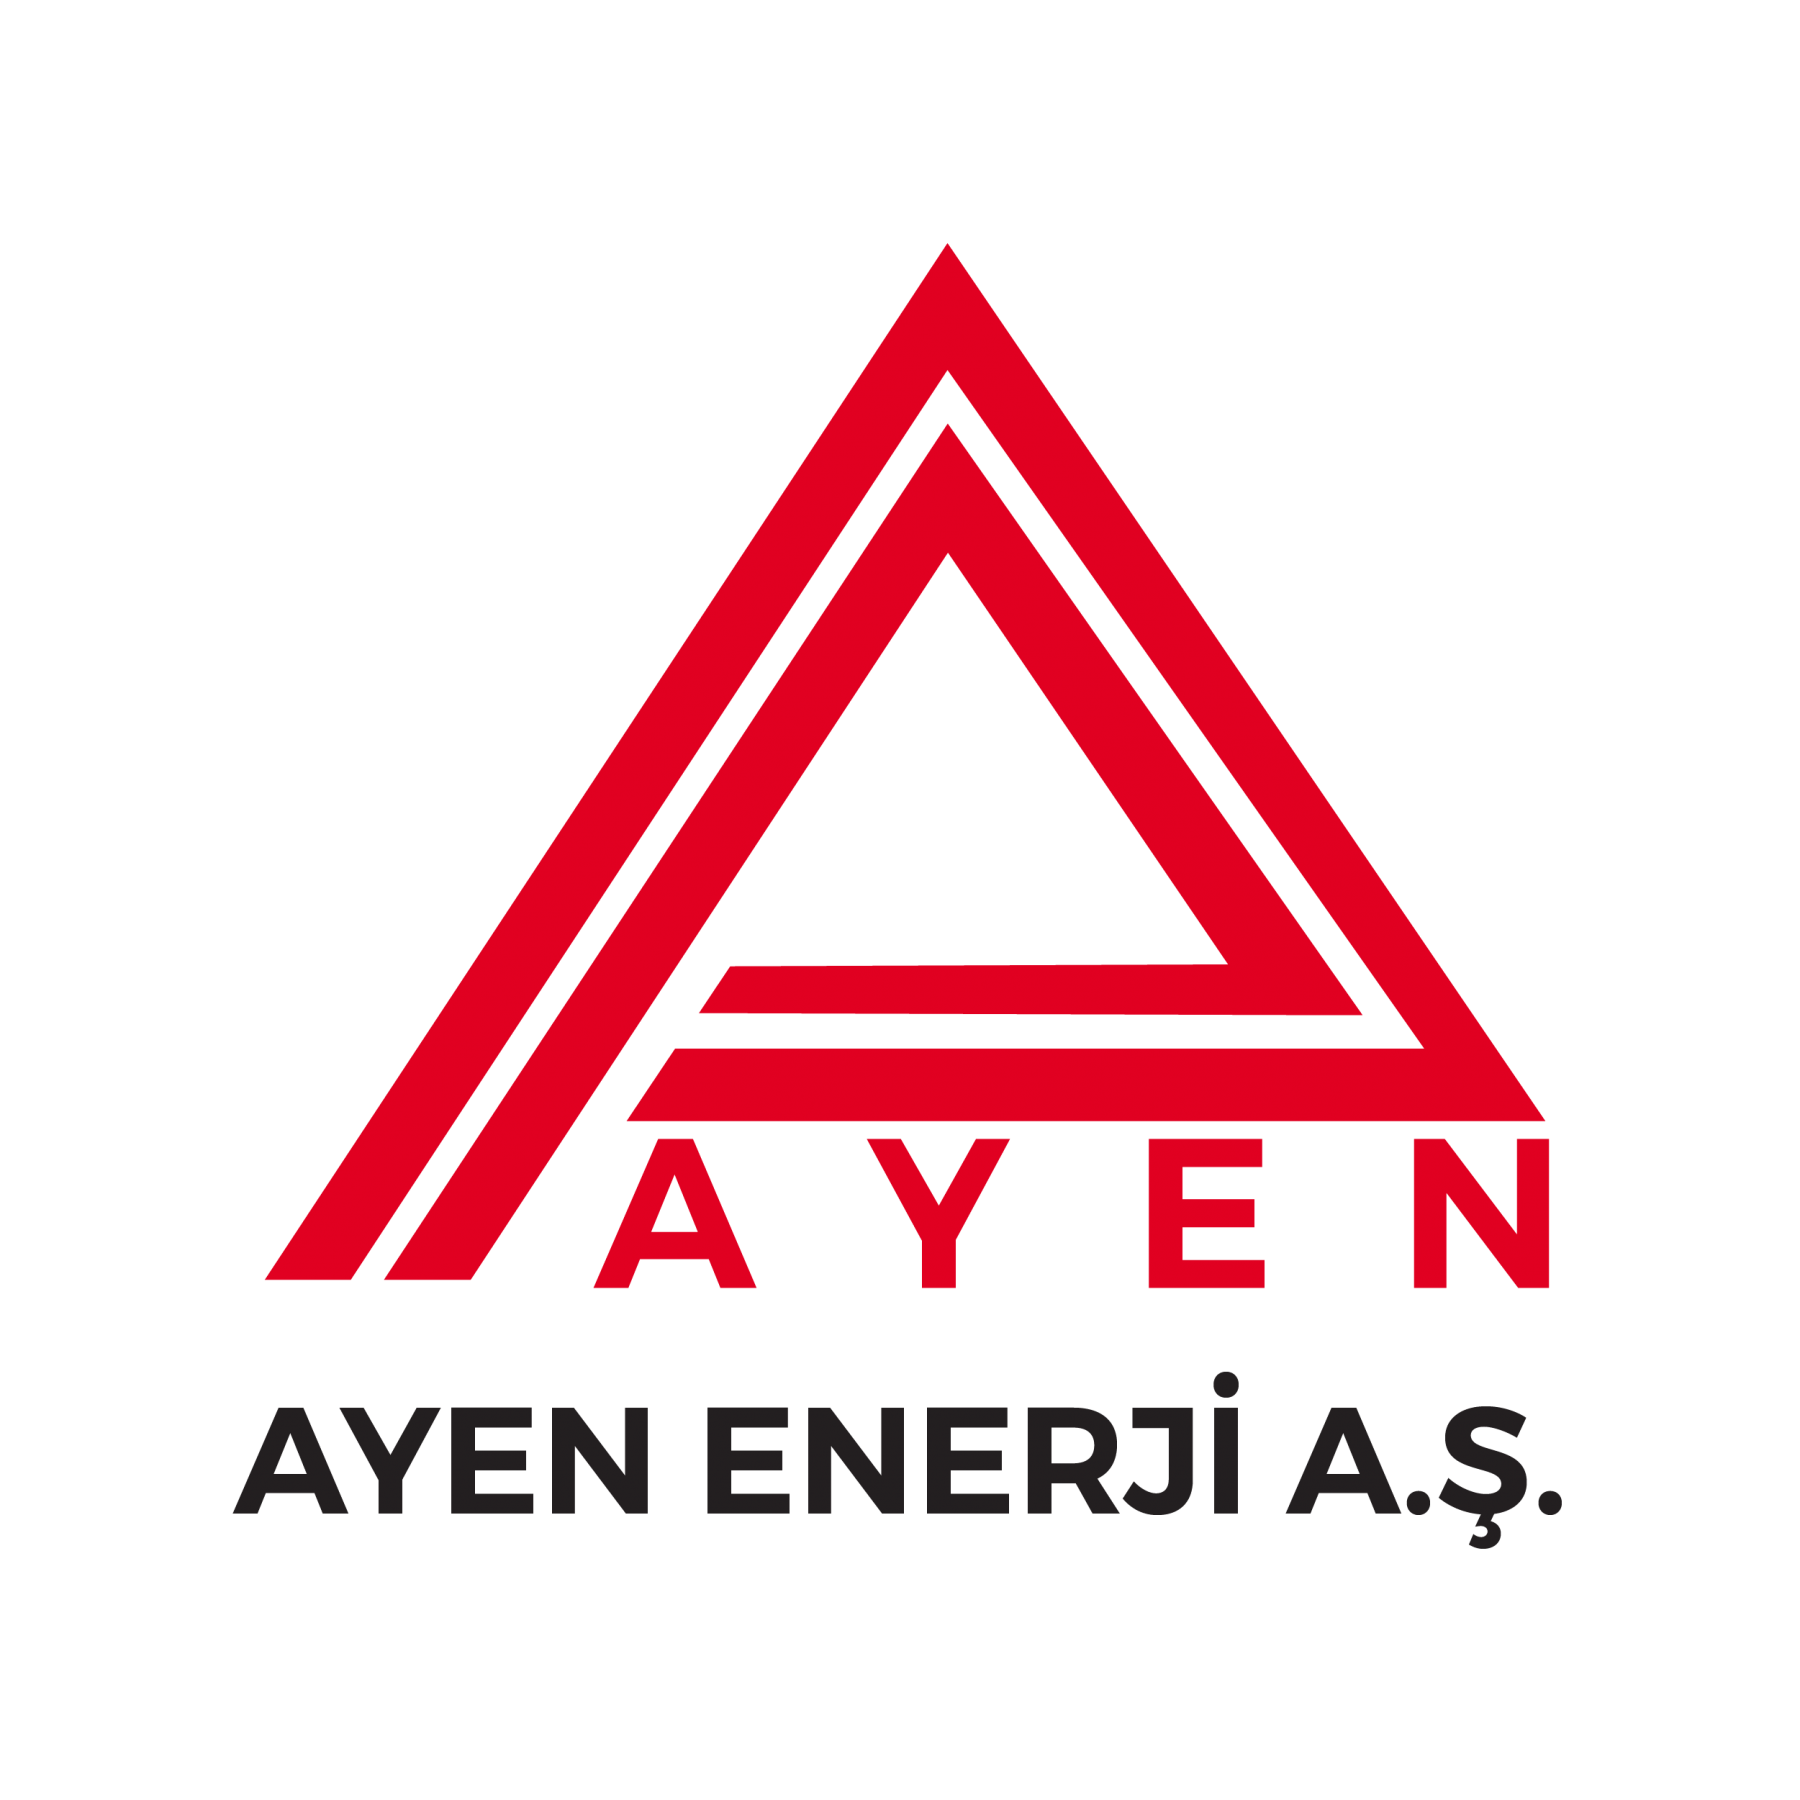 ayen-banner-08